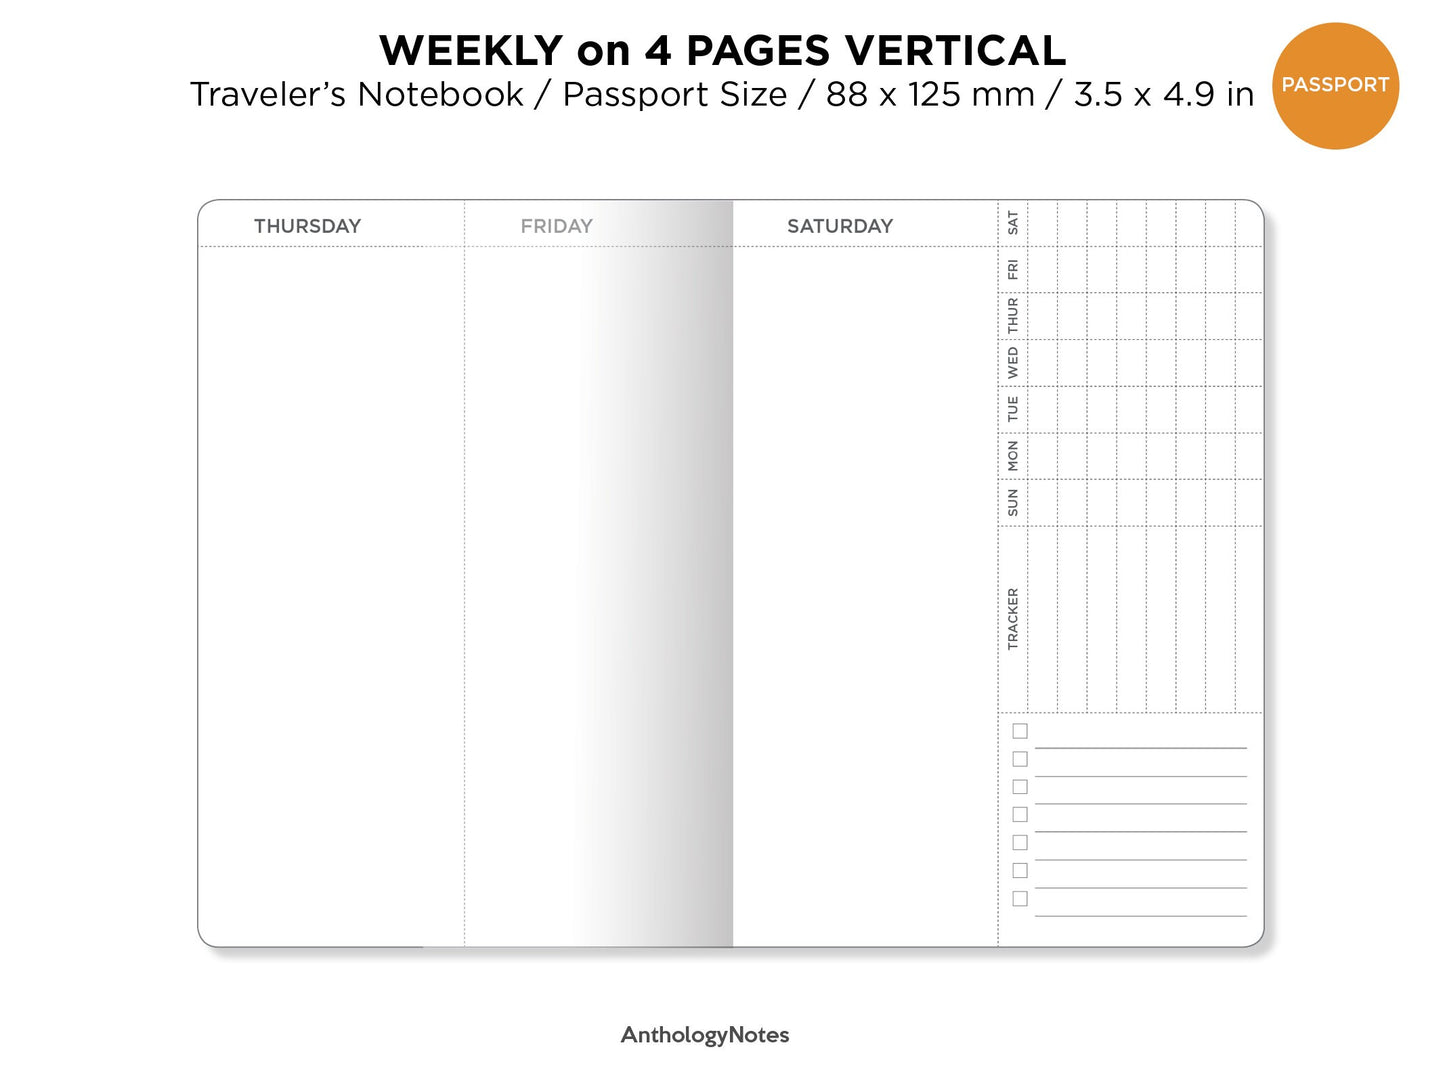 PASSPORT WEEKLY Vertical Traveler's Notebook Printable Insert with Tracker Minimalist Wo4P